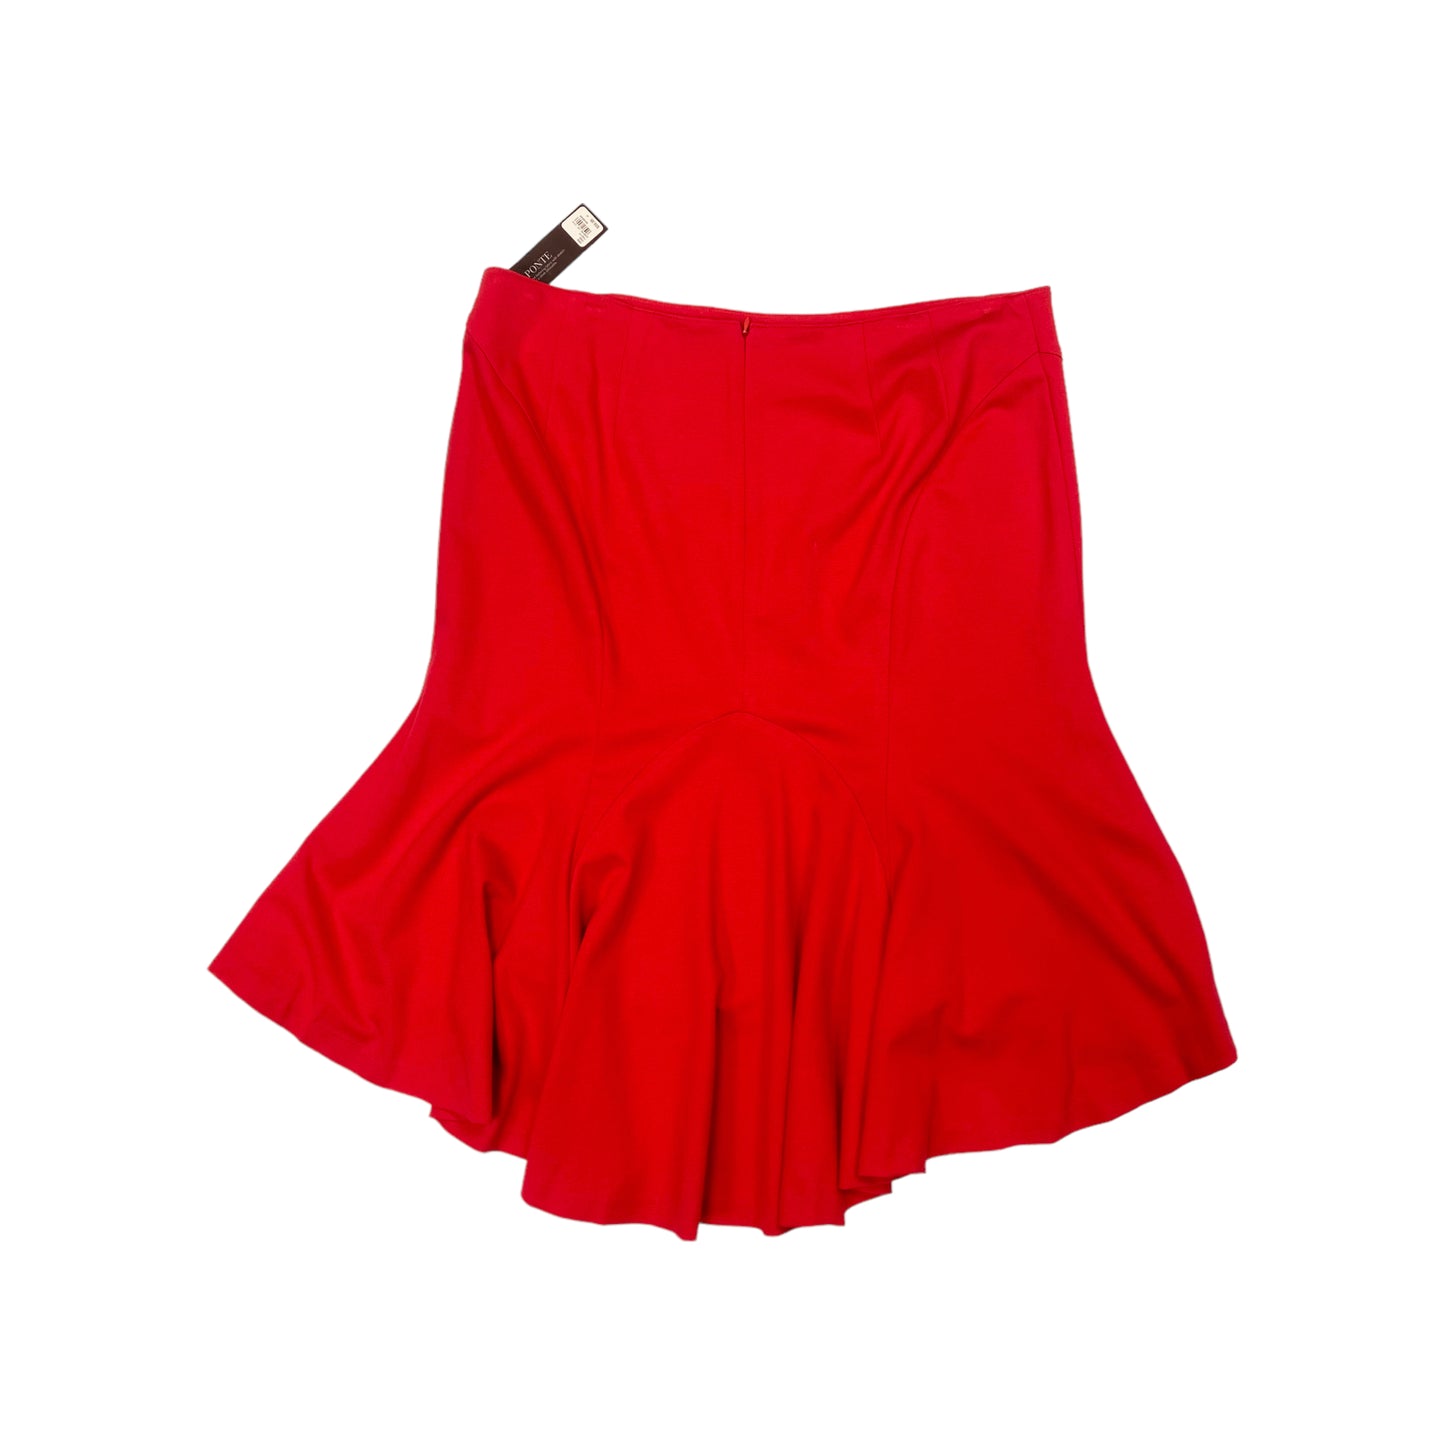 Skirt Midi By Lane Bryant  Size: 16